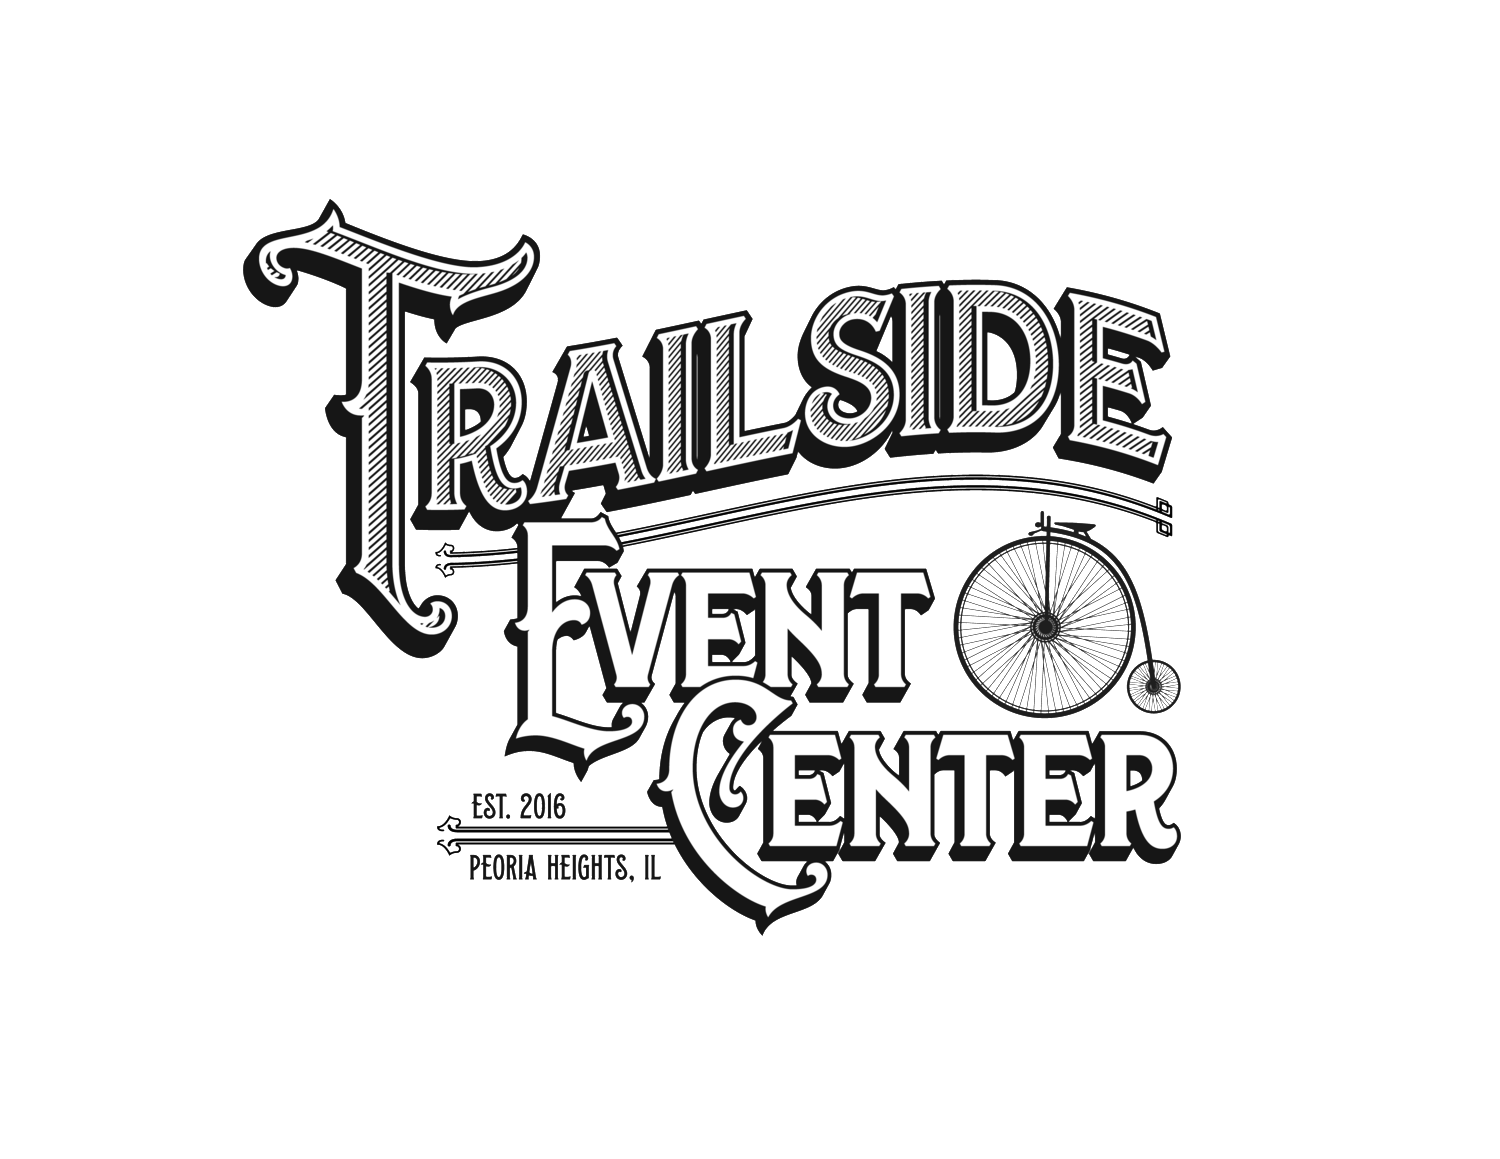 Trailside Event Center